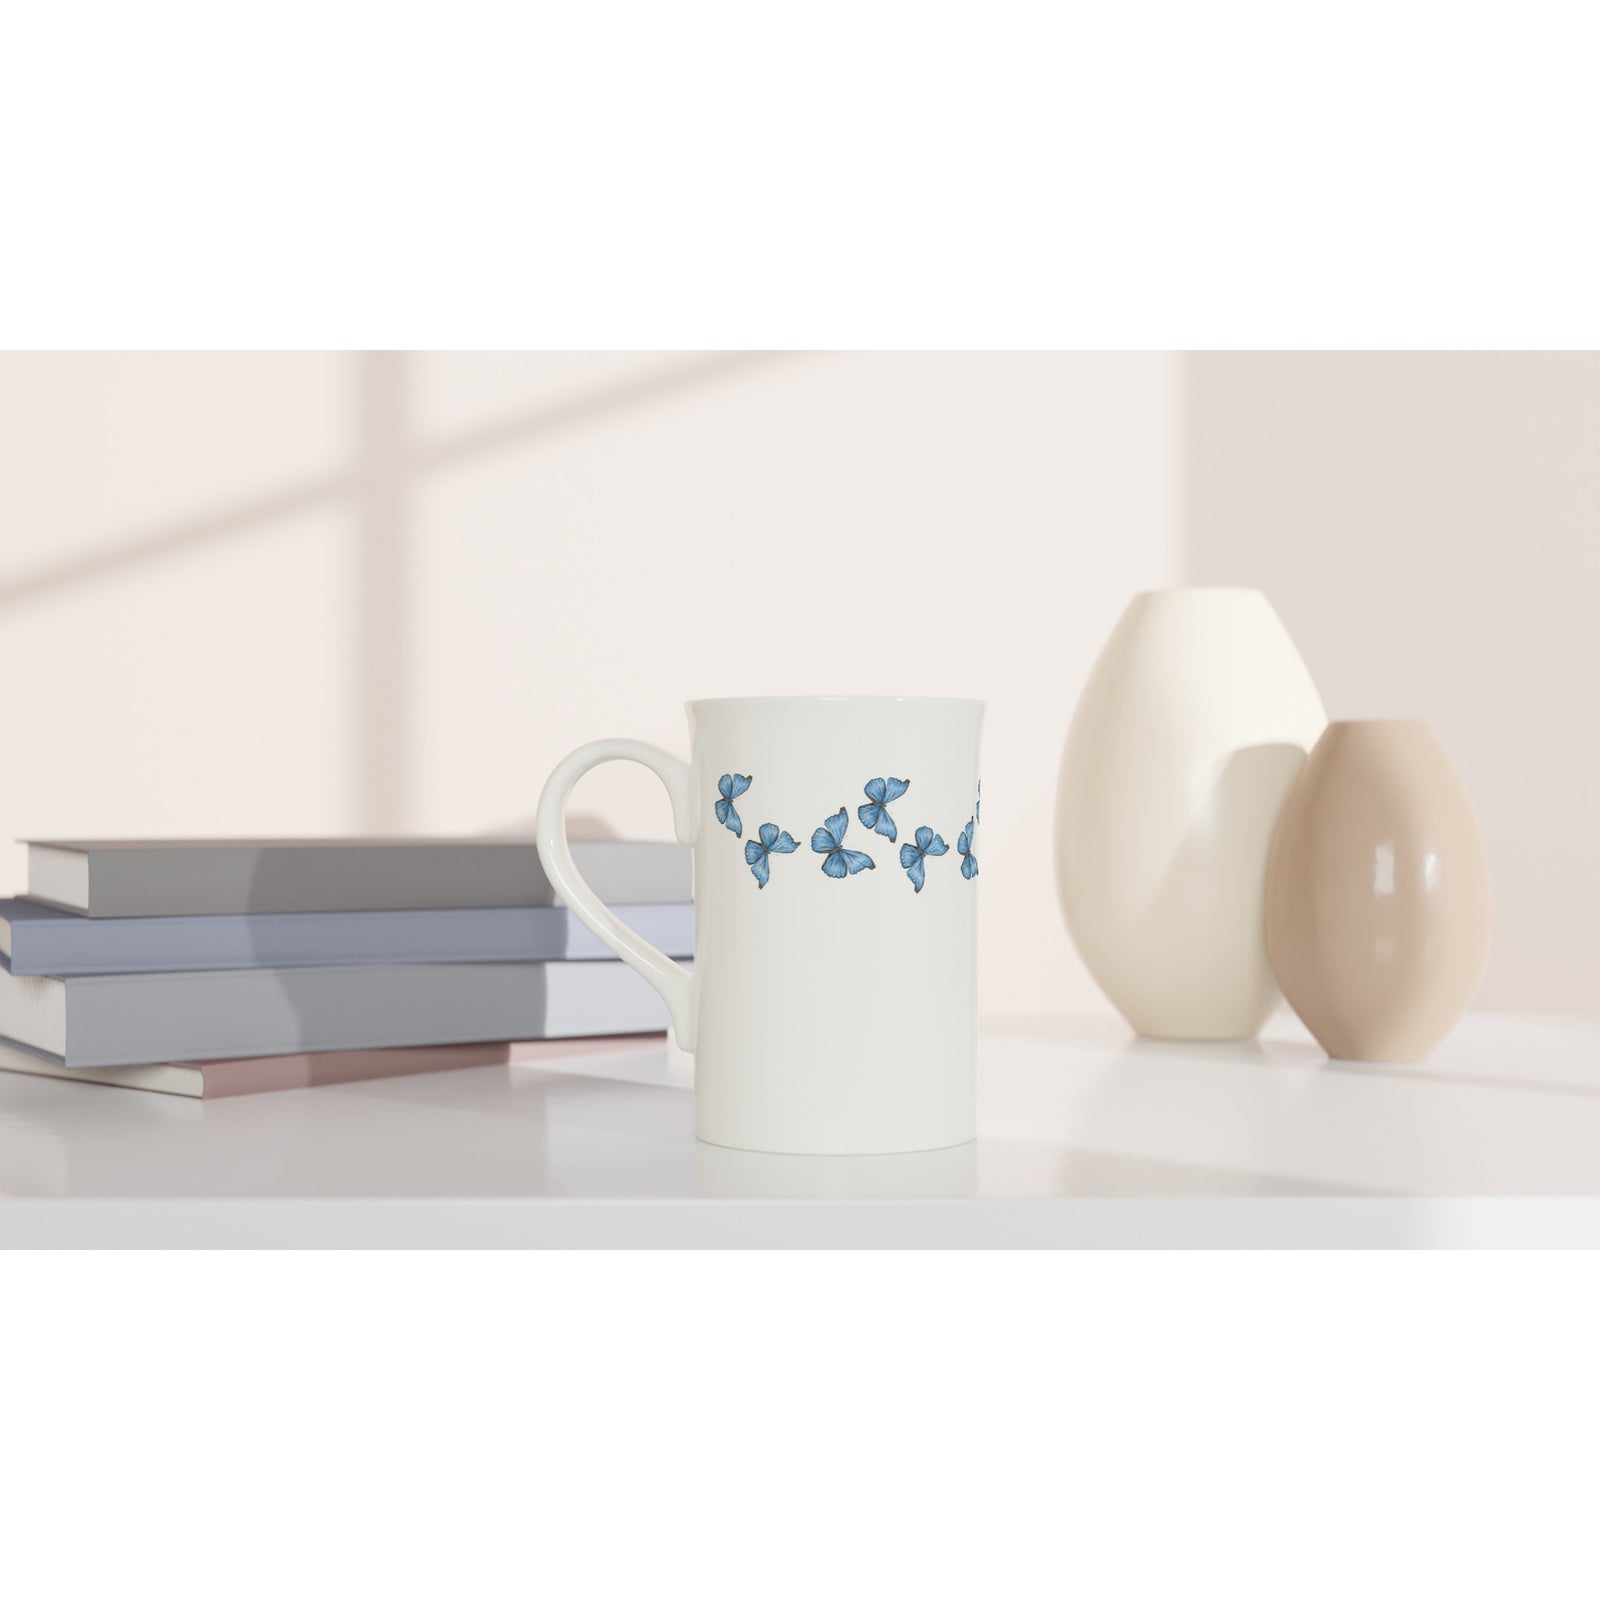 10 oz slim porcelain mug cramer’s blue morpho  butterfly pattern